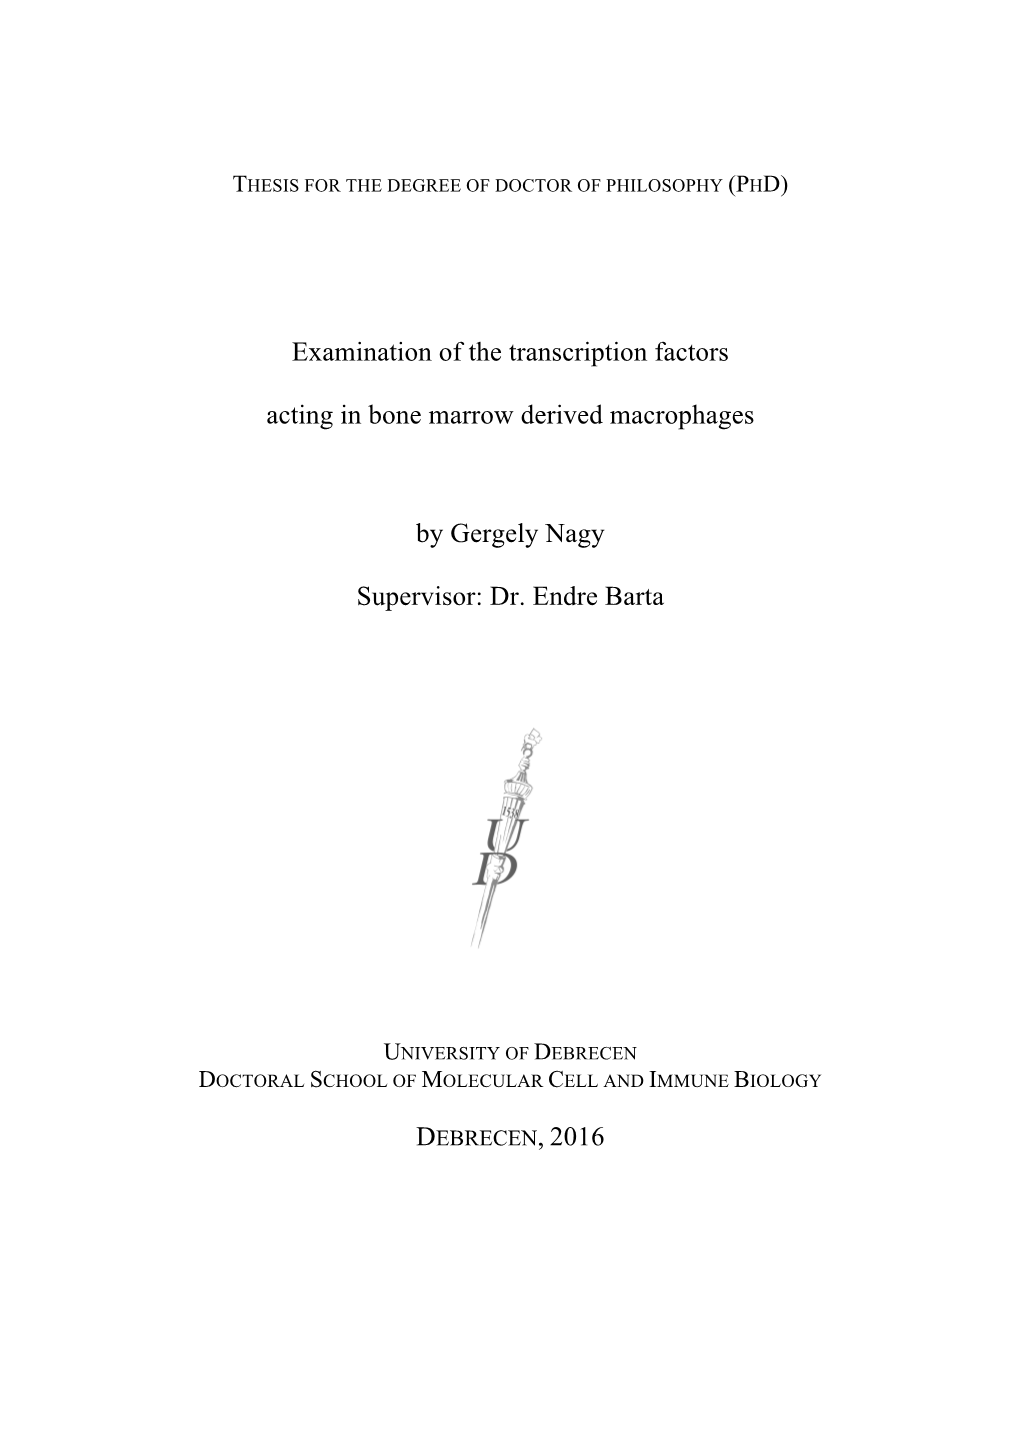 Examination of the Transcription Factors Acting in Bone Marrow